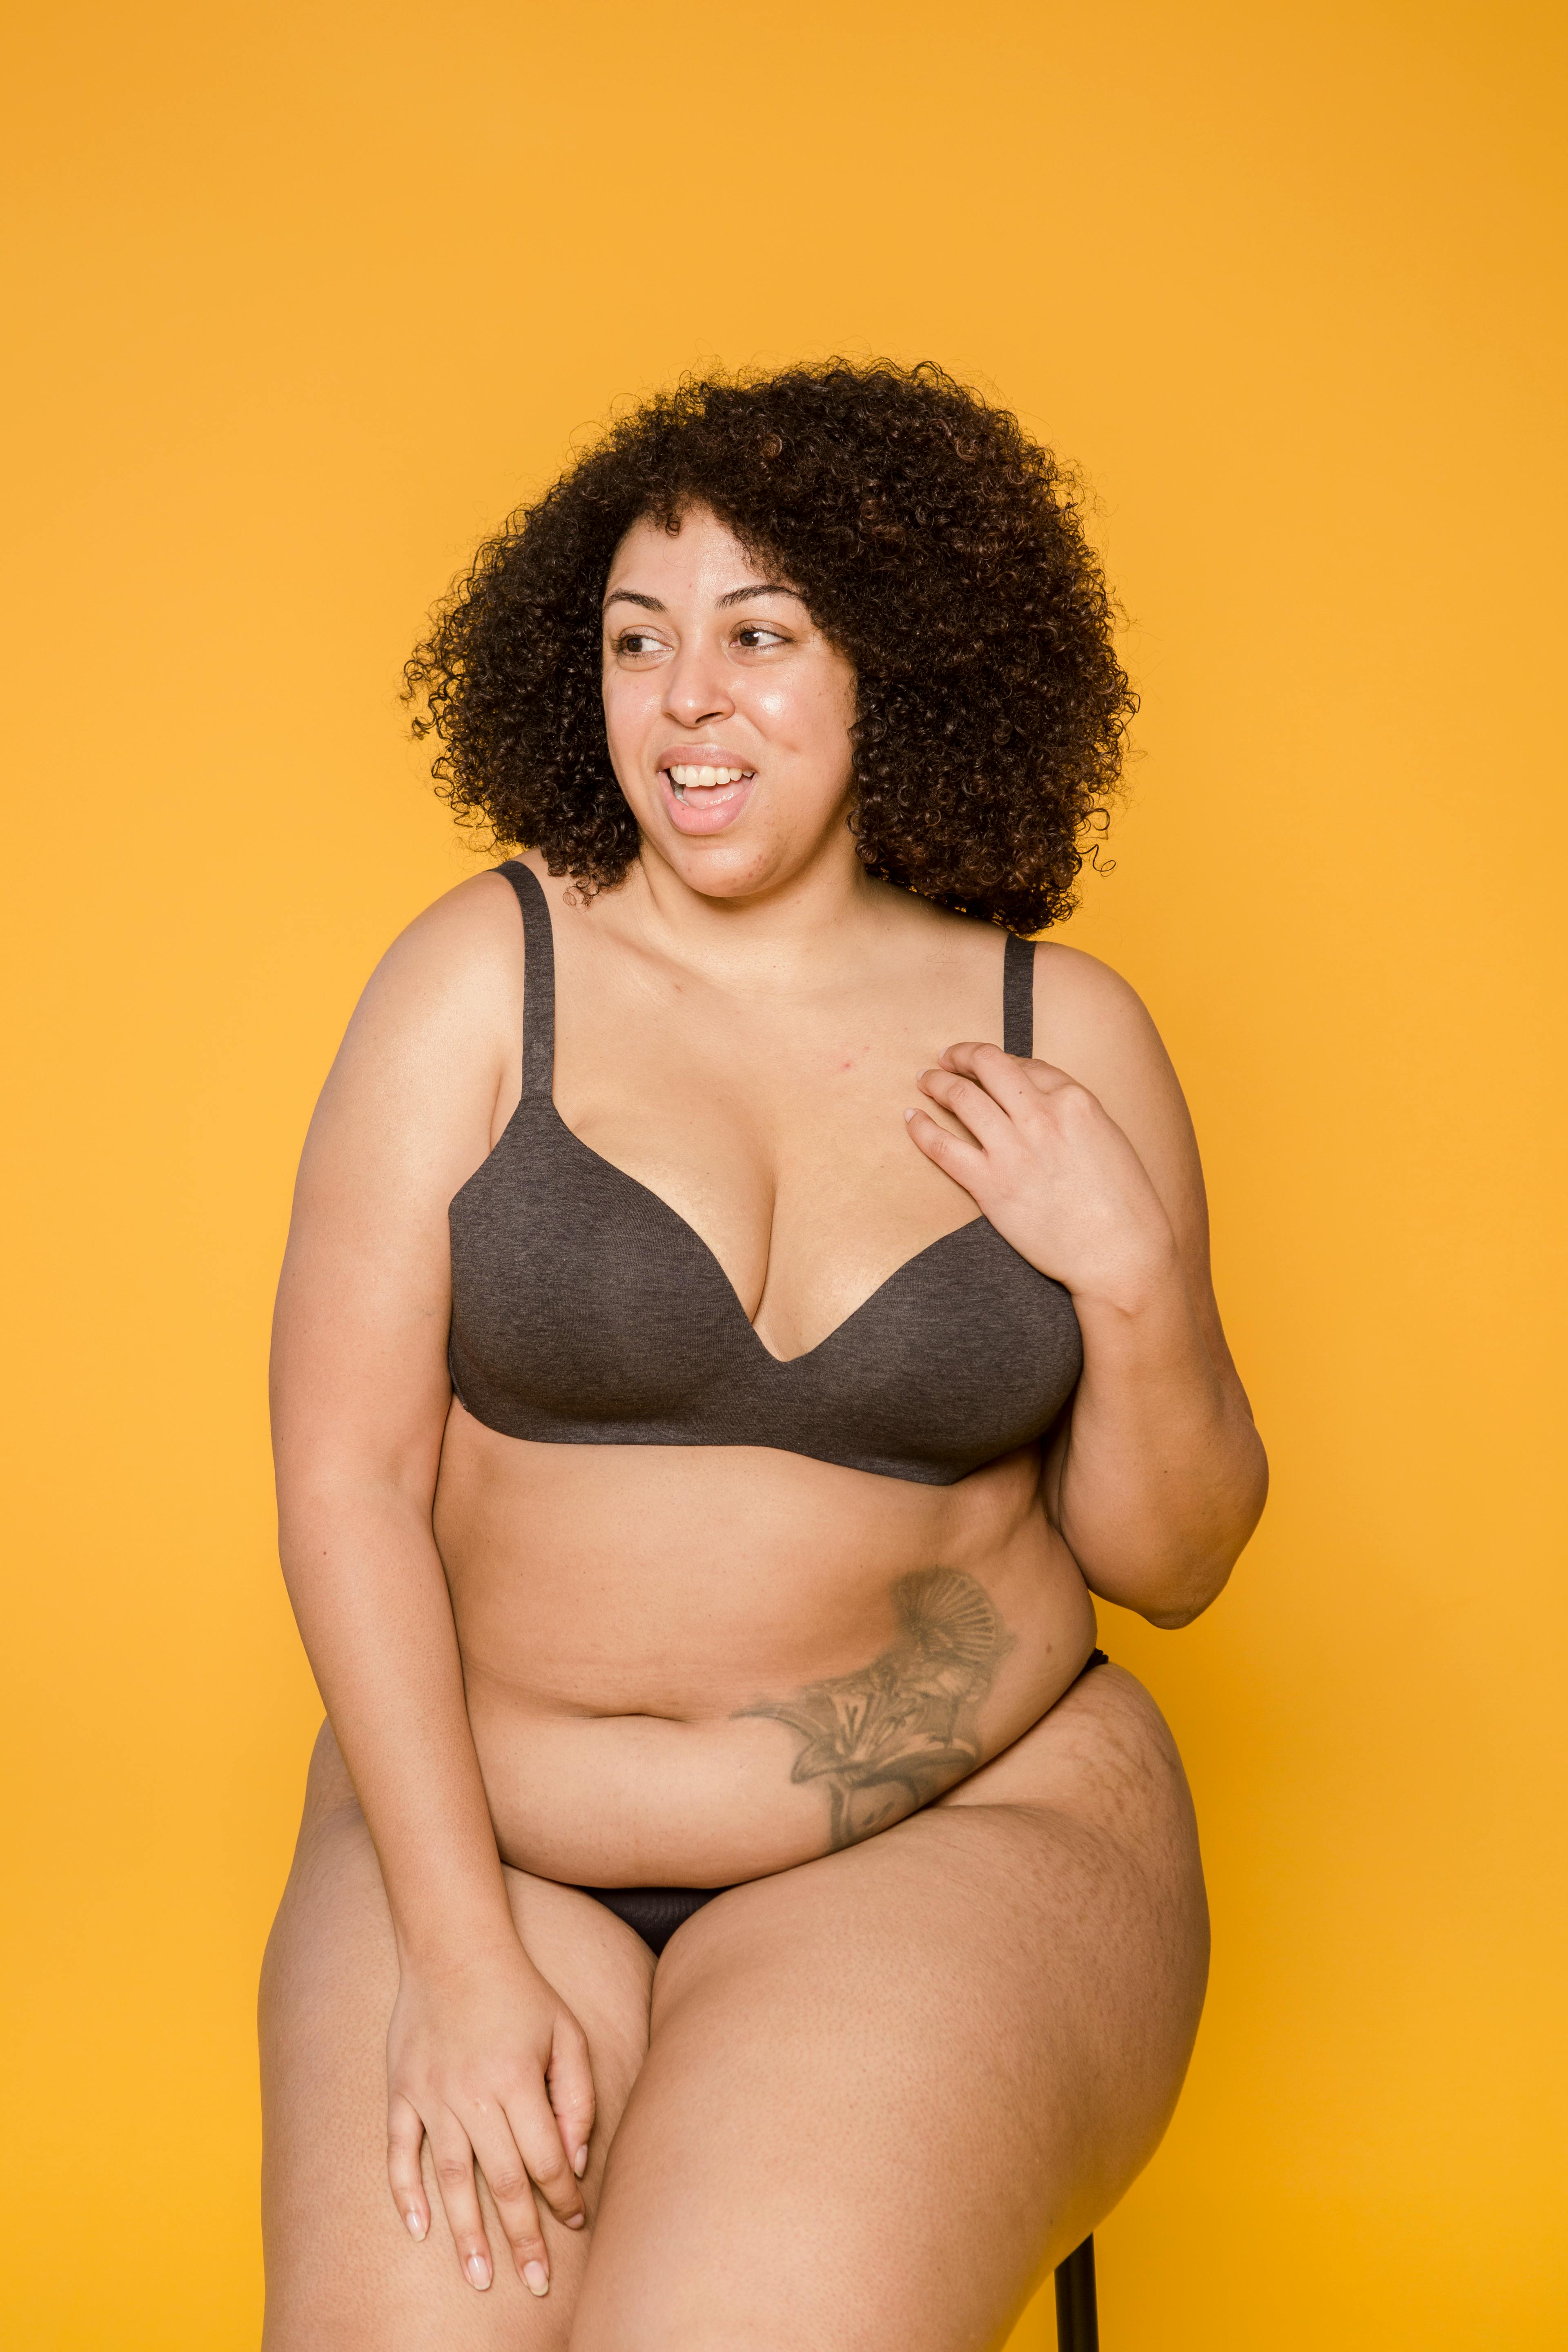 Crop plump black woman in underwear · Free Stock Photo